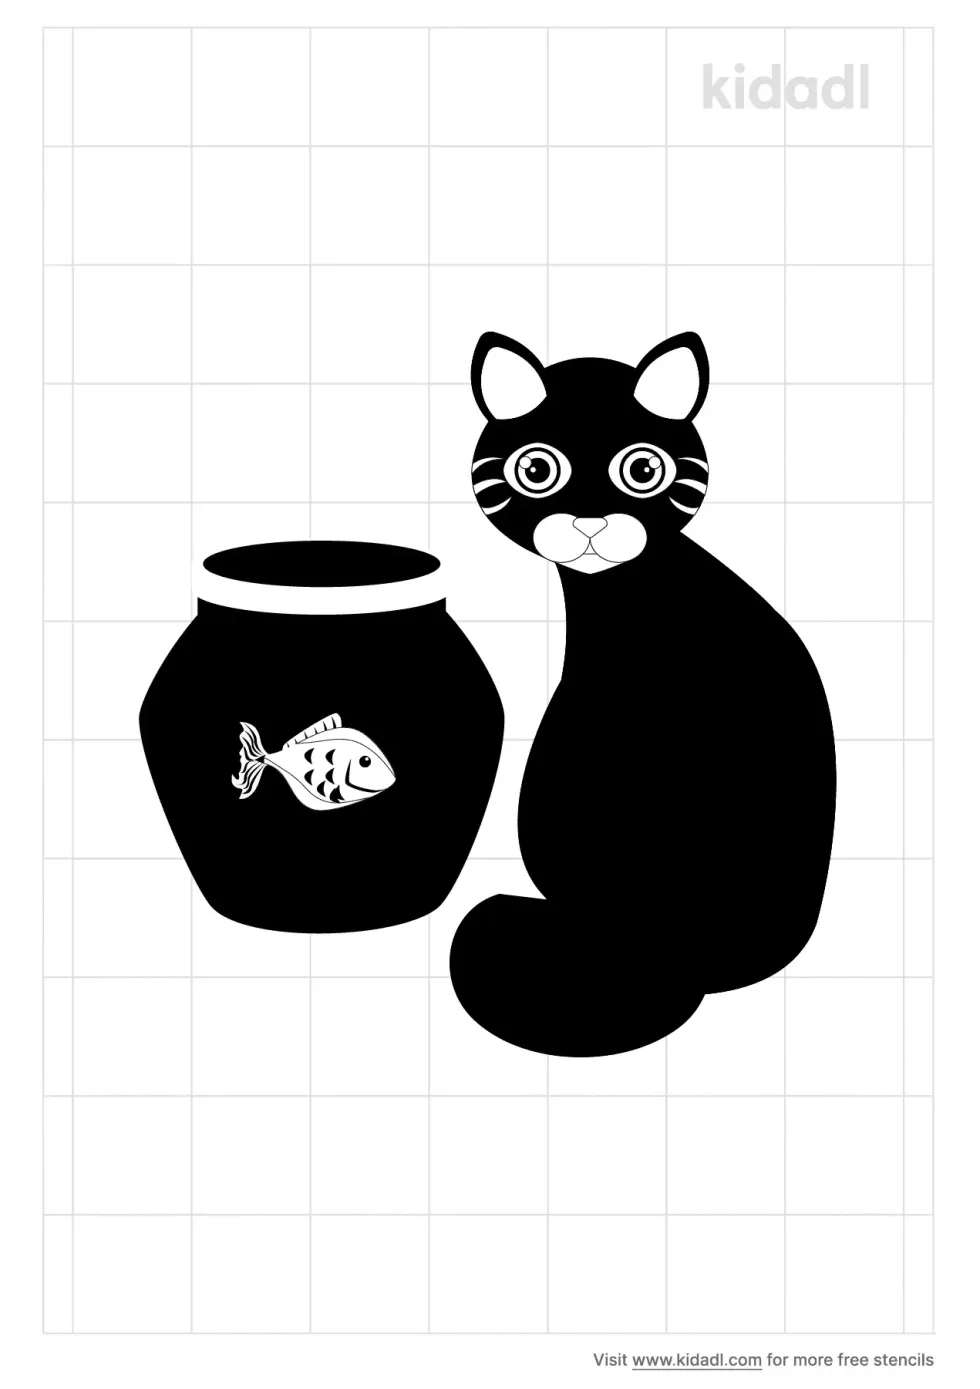 Cat And Fish Bowl